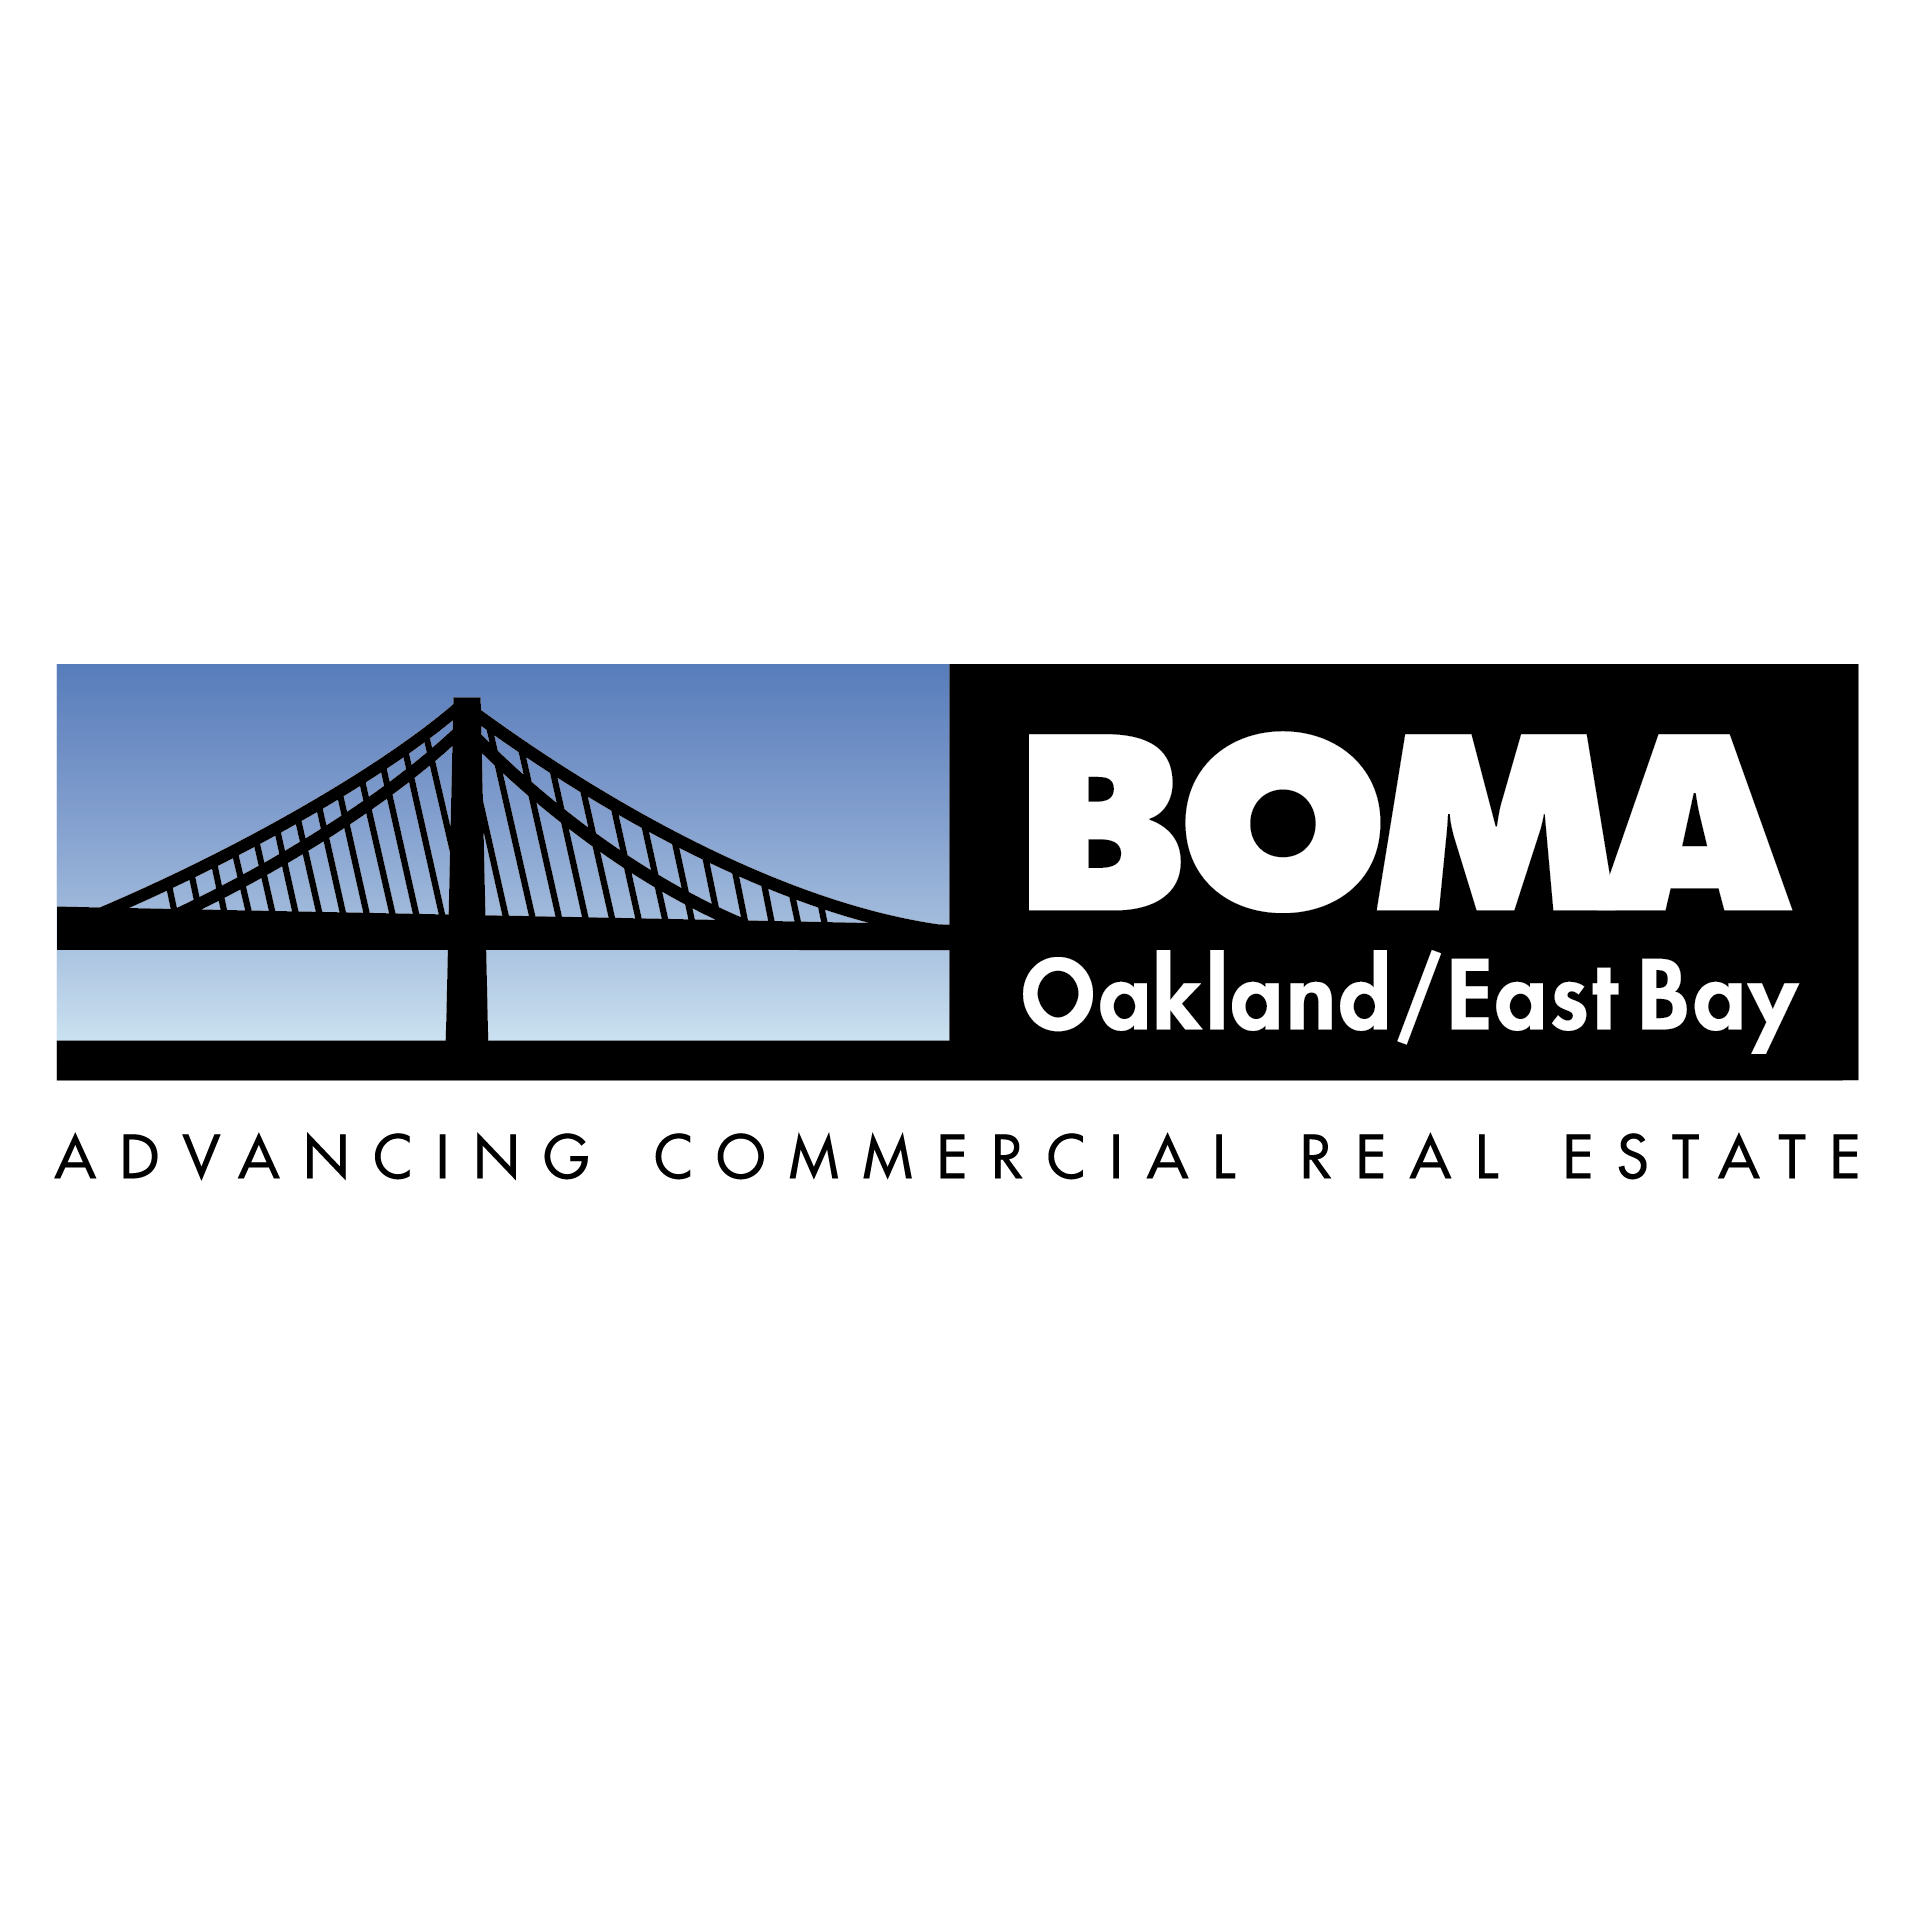 Boma Oakland/East Bay